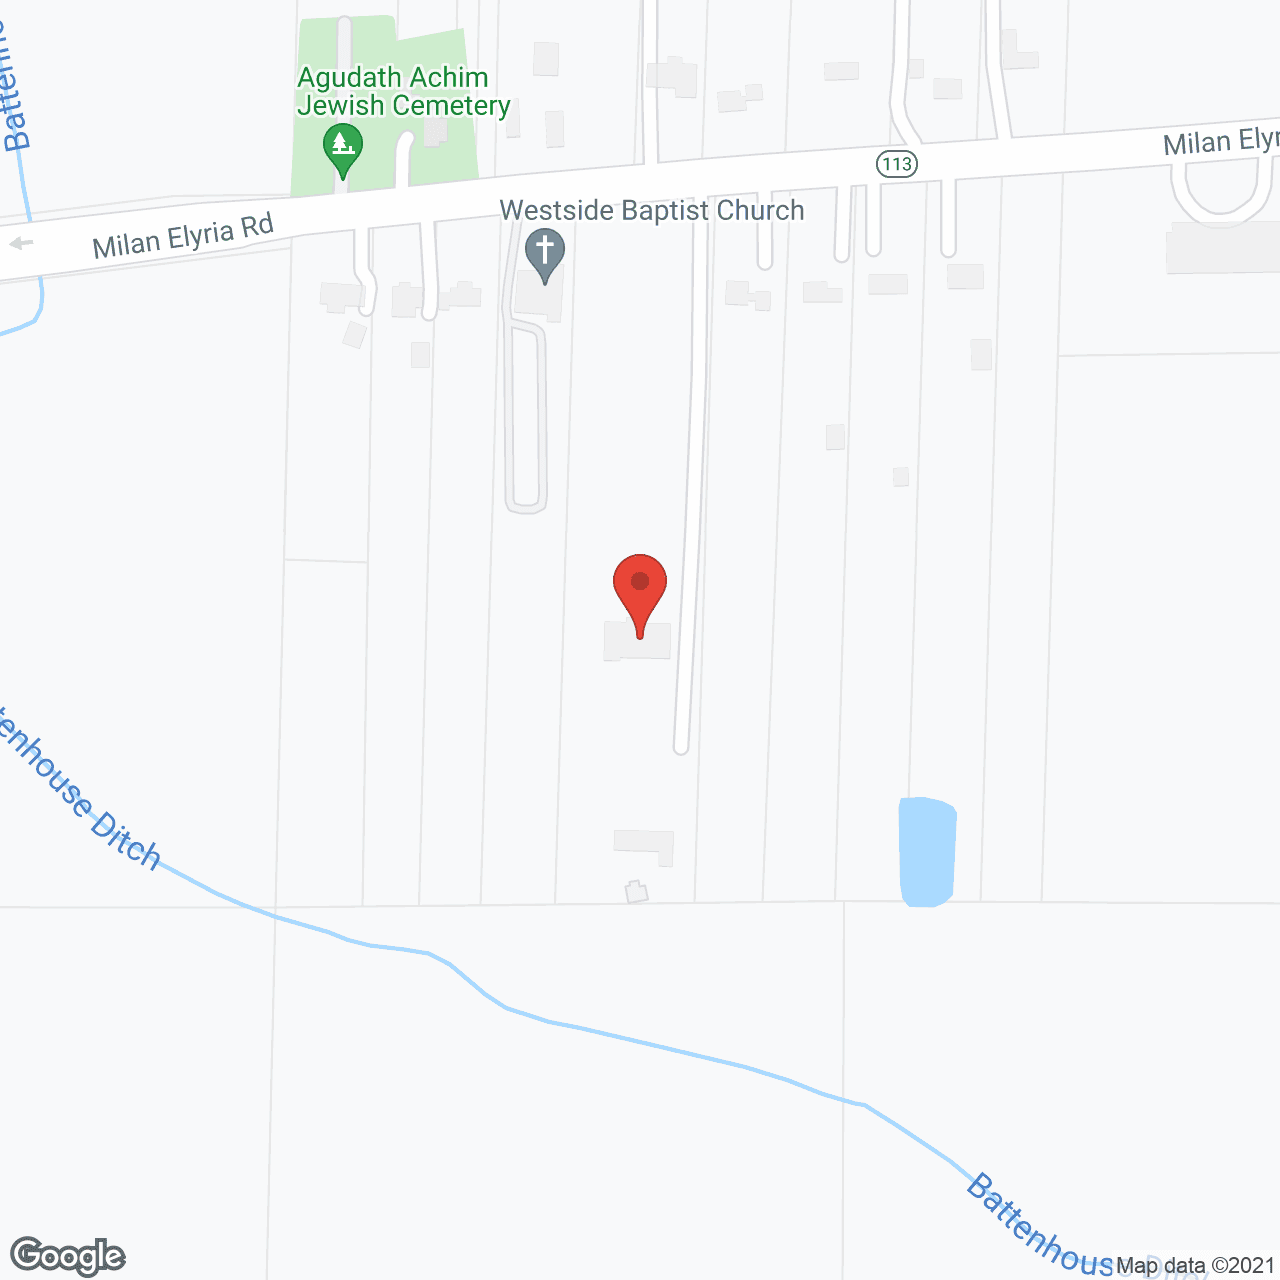 Plumbrook in google map